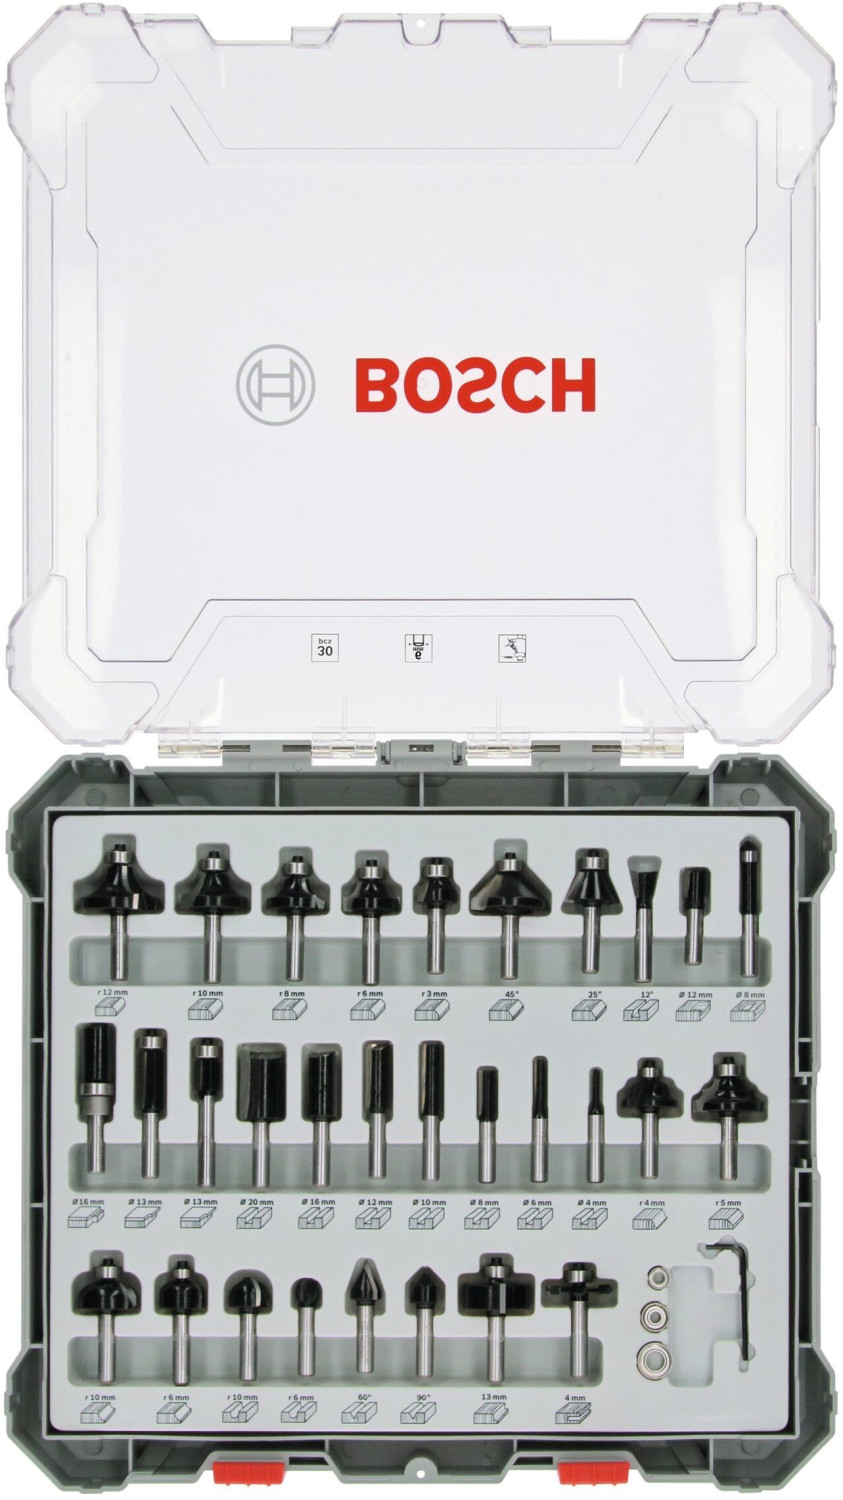 Broca fresadora - Bosch Professional